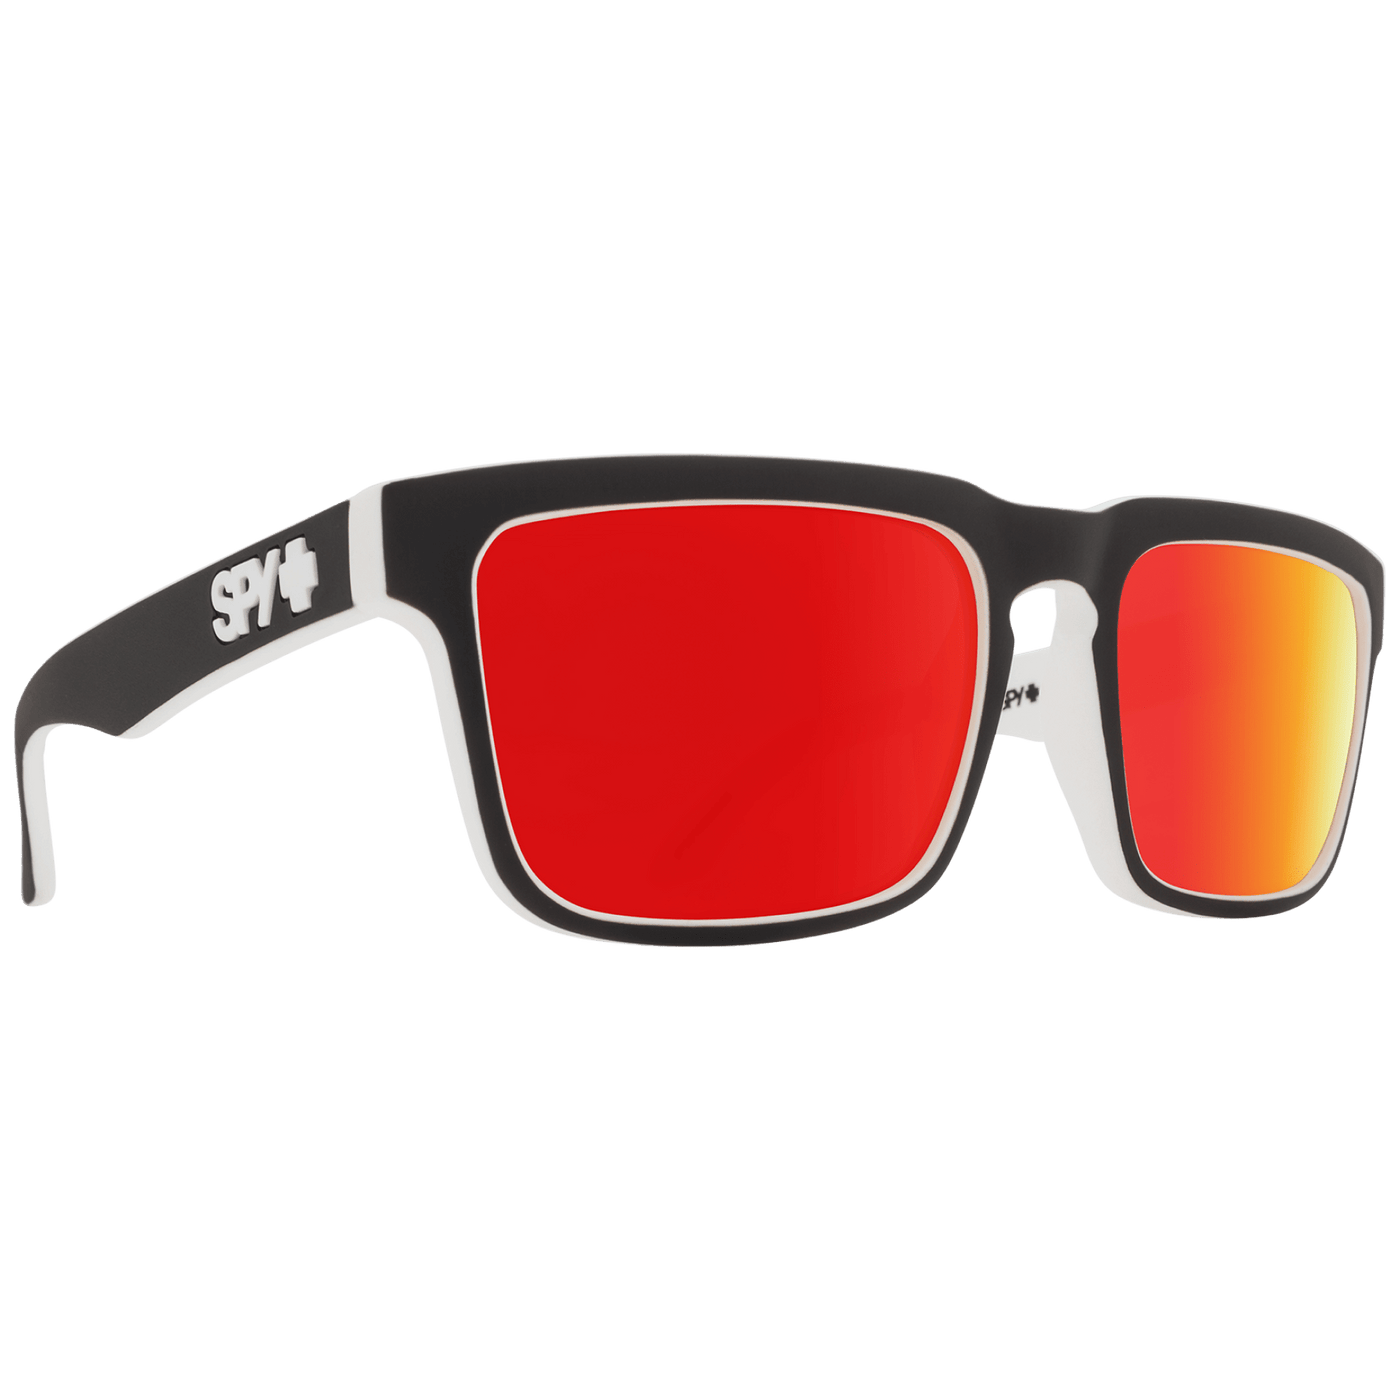 SPY HELM Sunglasses, Happy Lens - Red